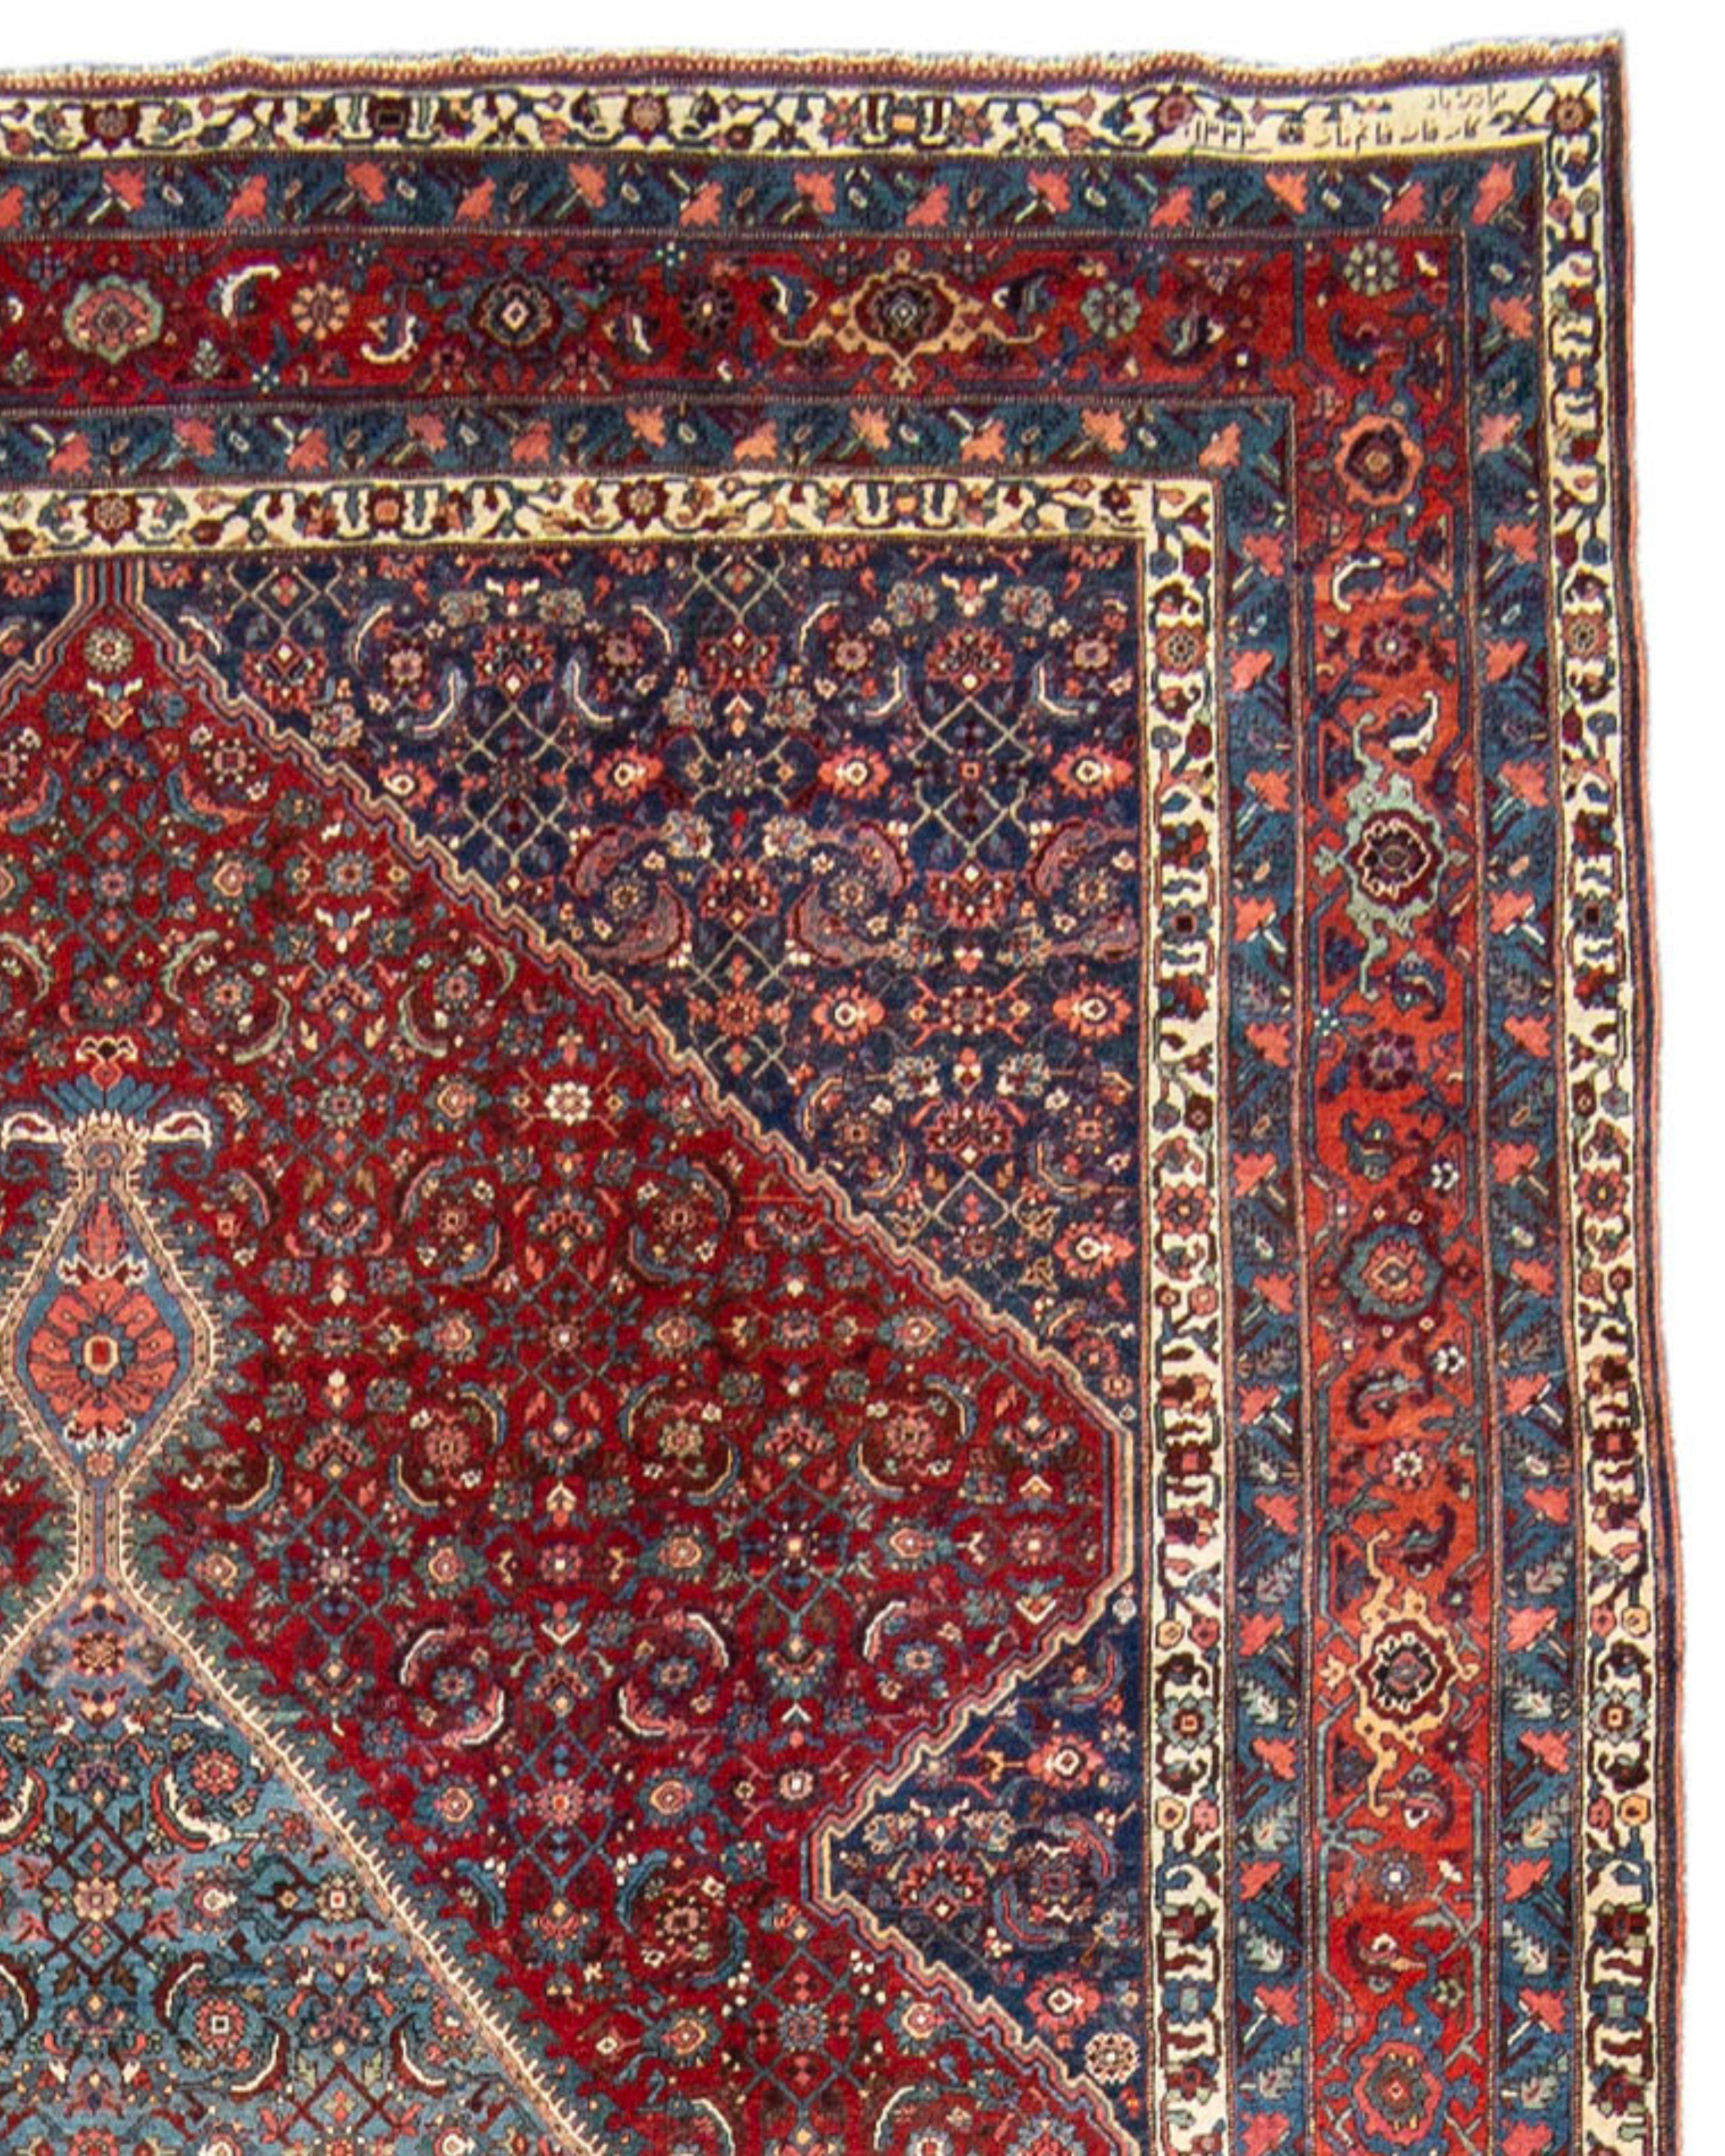 Antique Persian Bidjar Carpet, Late 19th Century

Excellent condition.

Additional Information:
Dimensions: 11' x 18'4